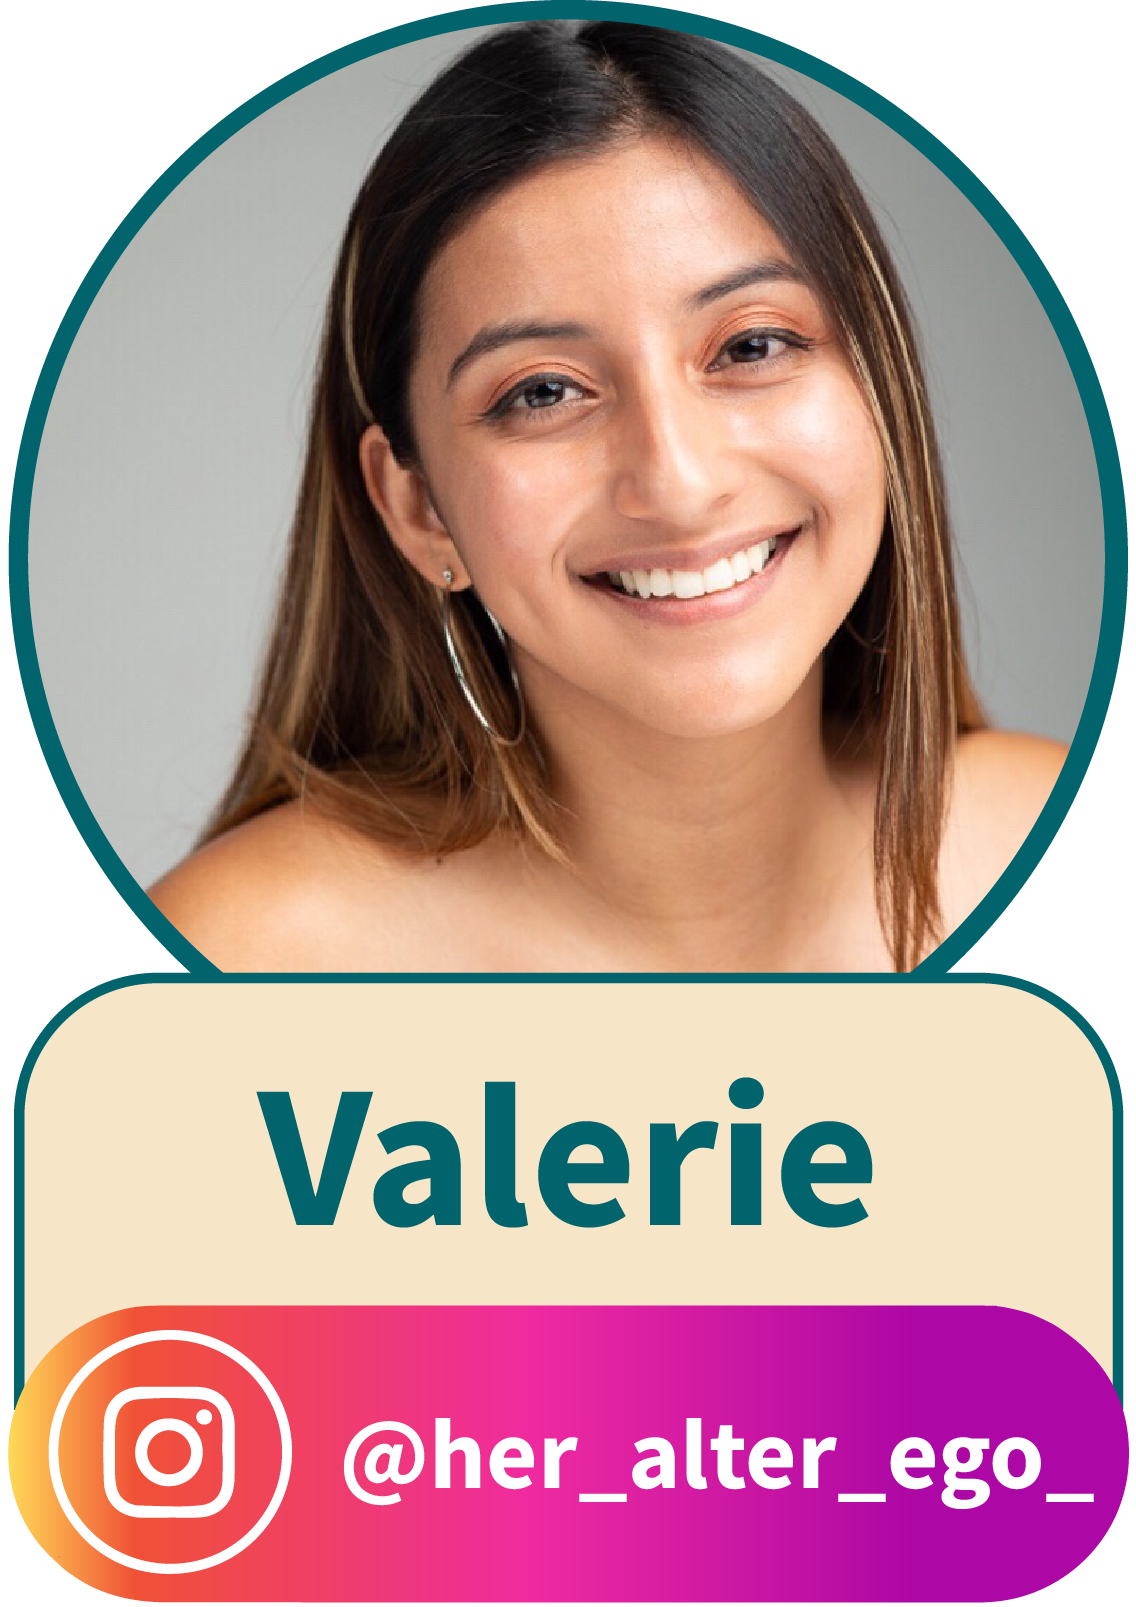 Valerie image